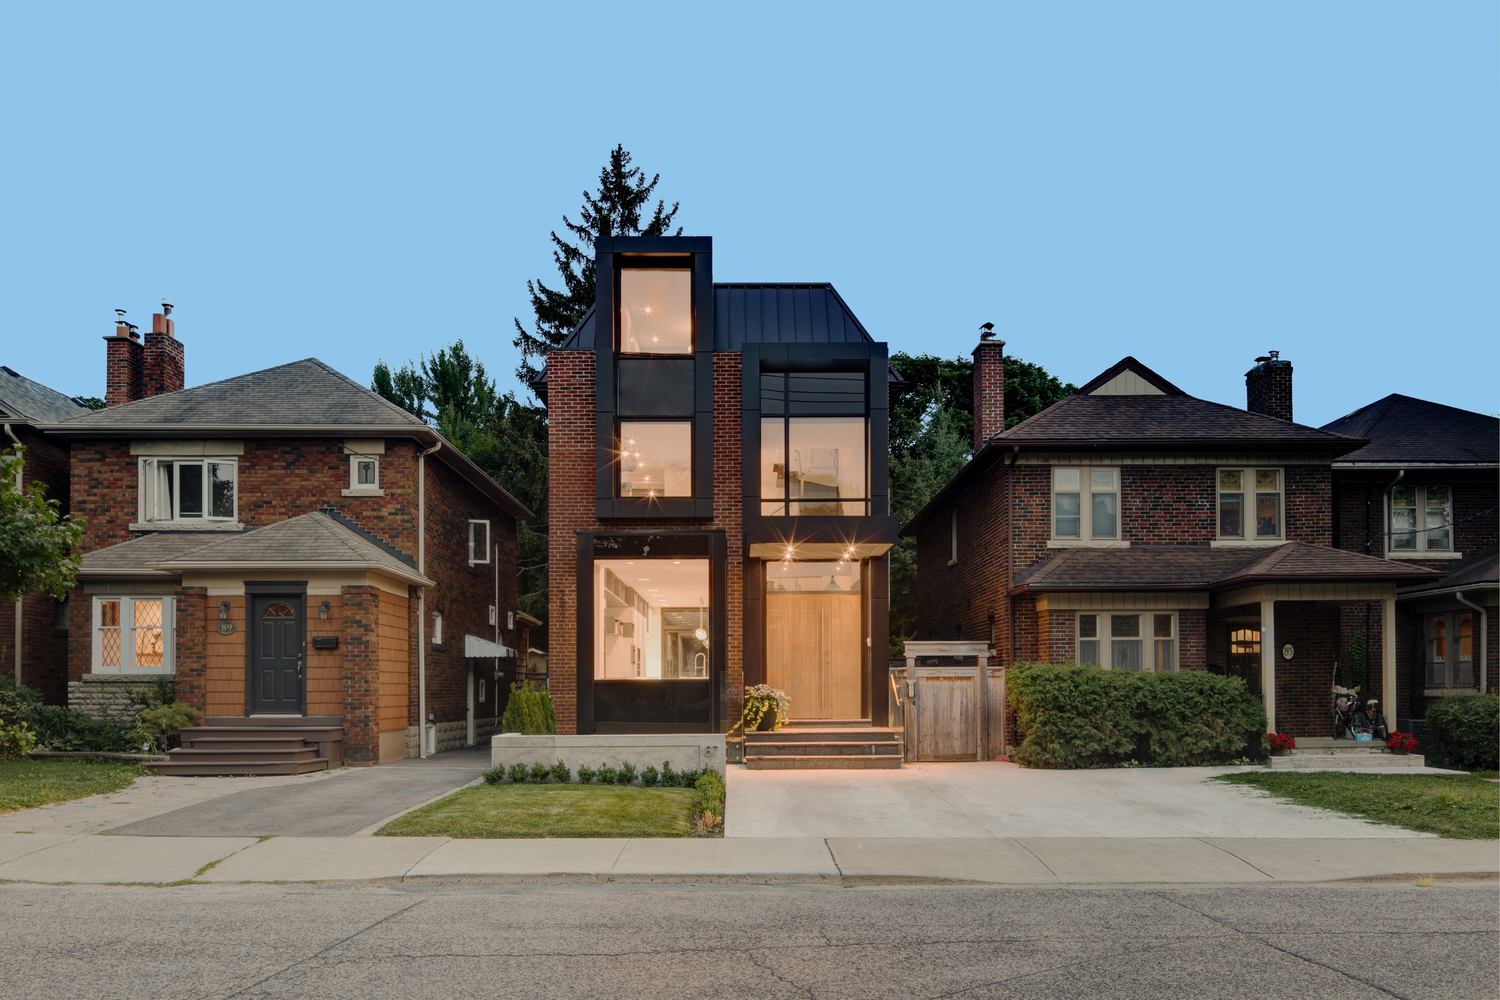 General 1500x1000 house architecture modern neighborhood street